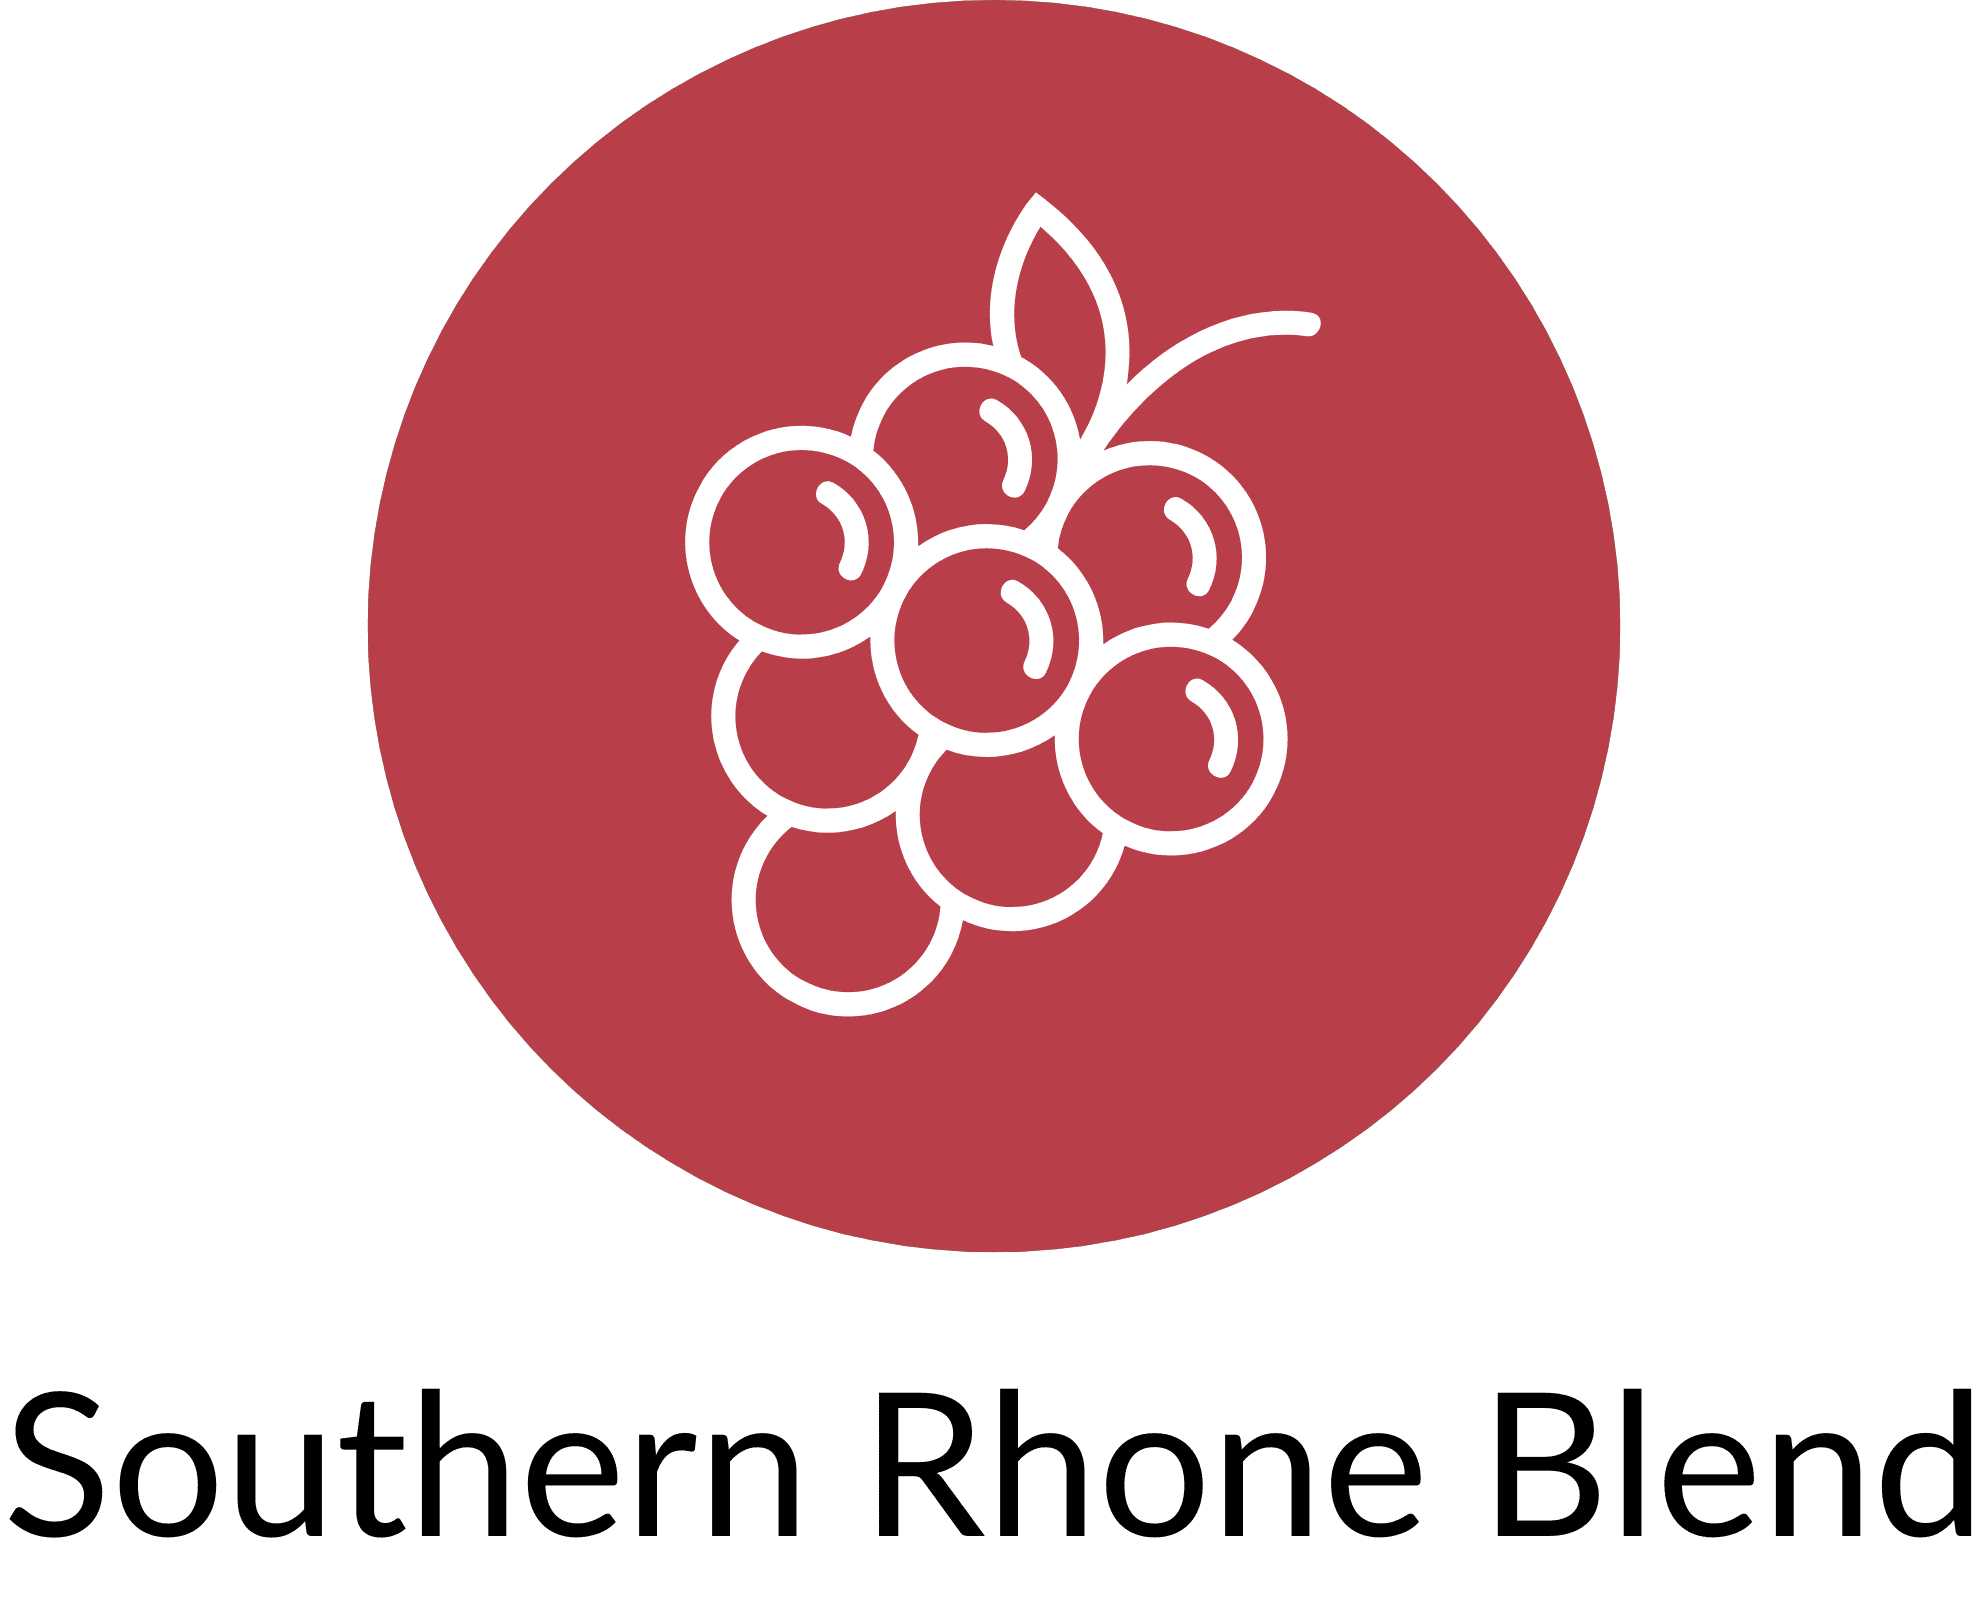 Southern Rhone Blend